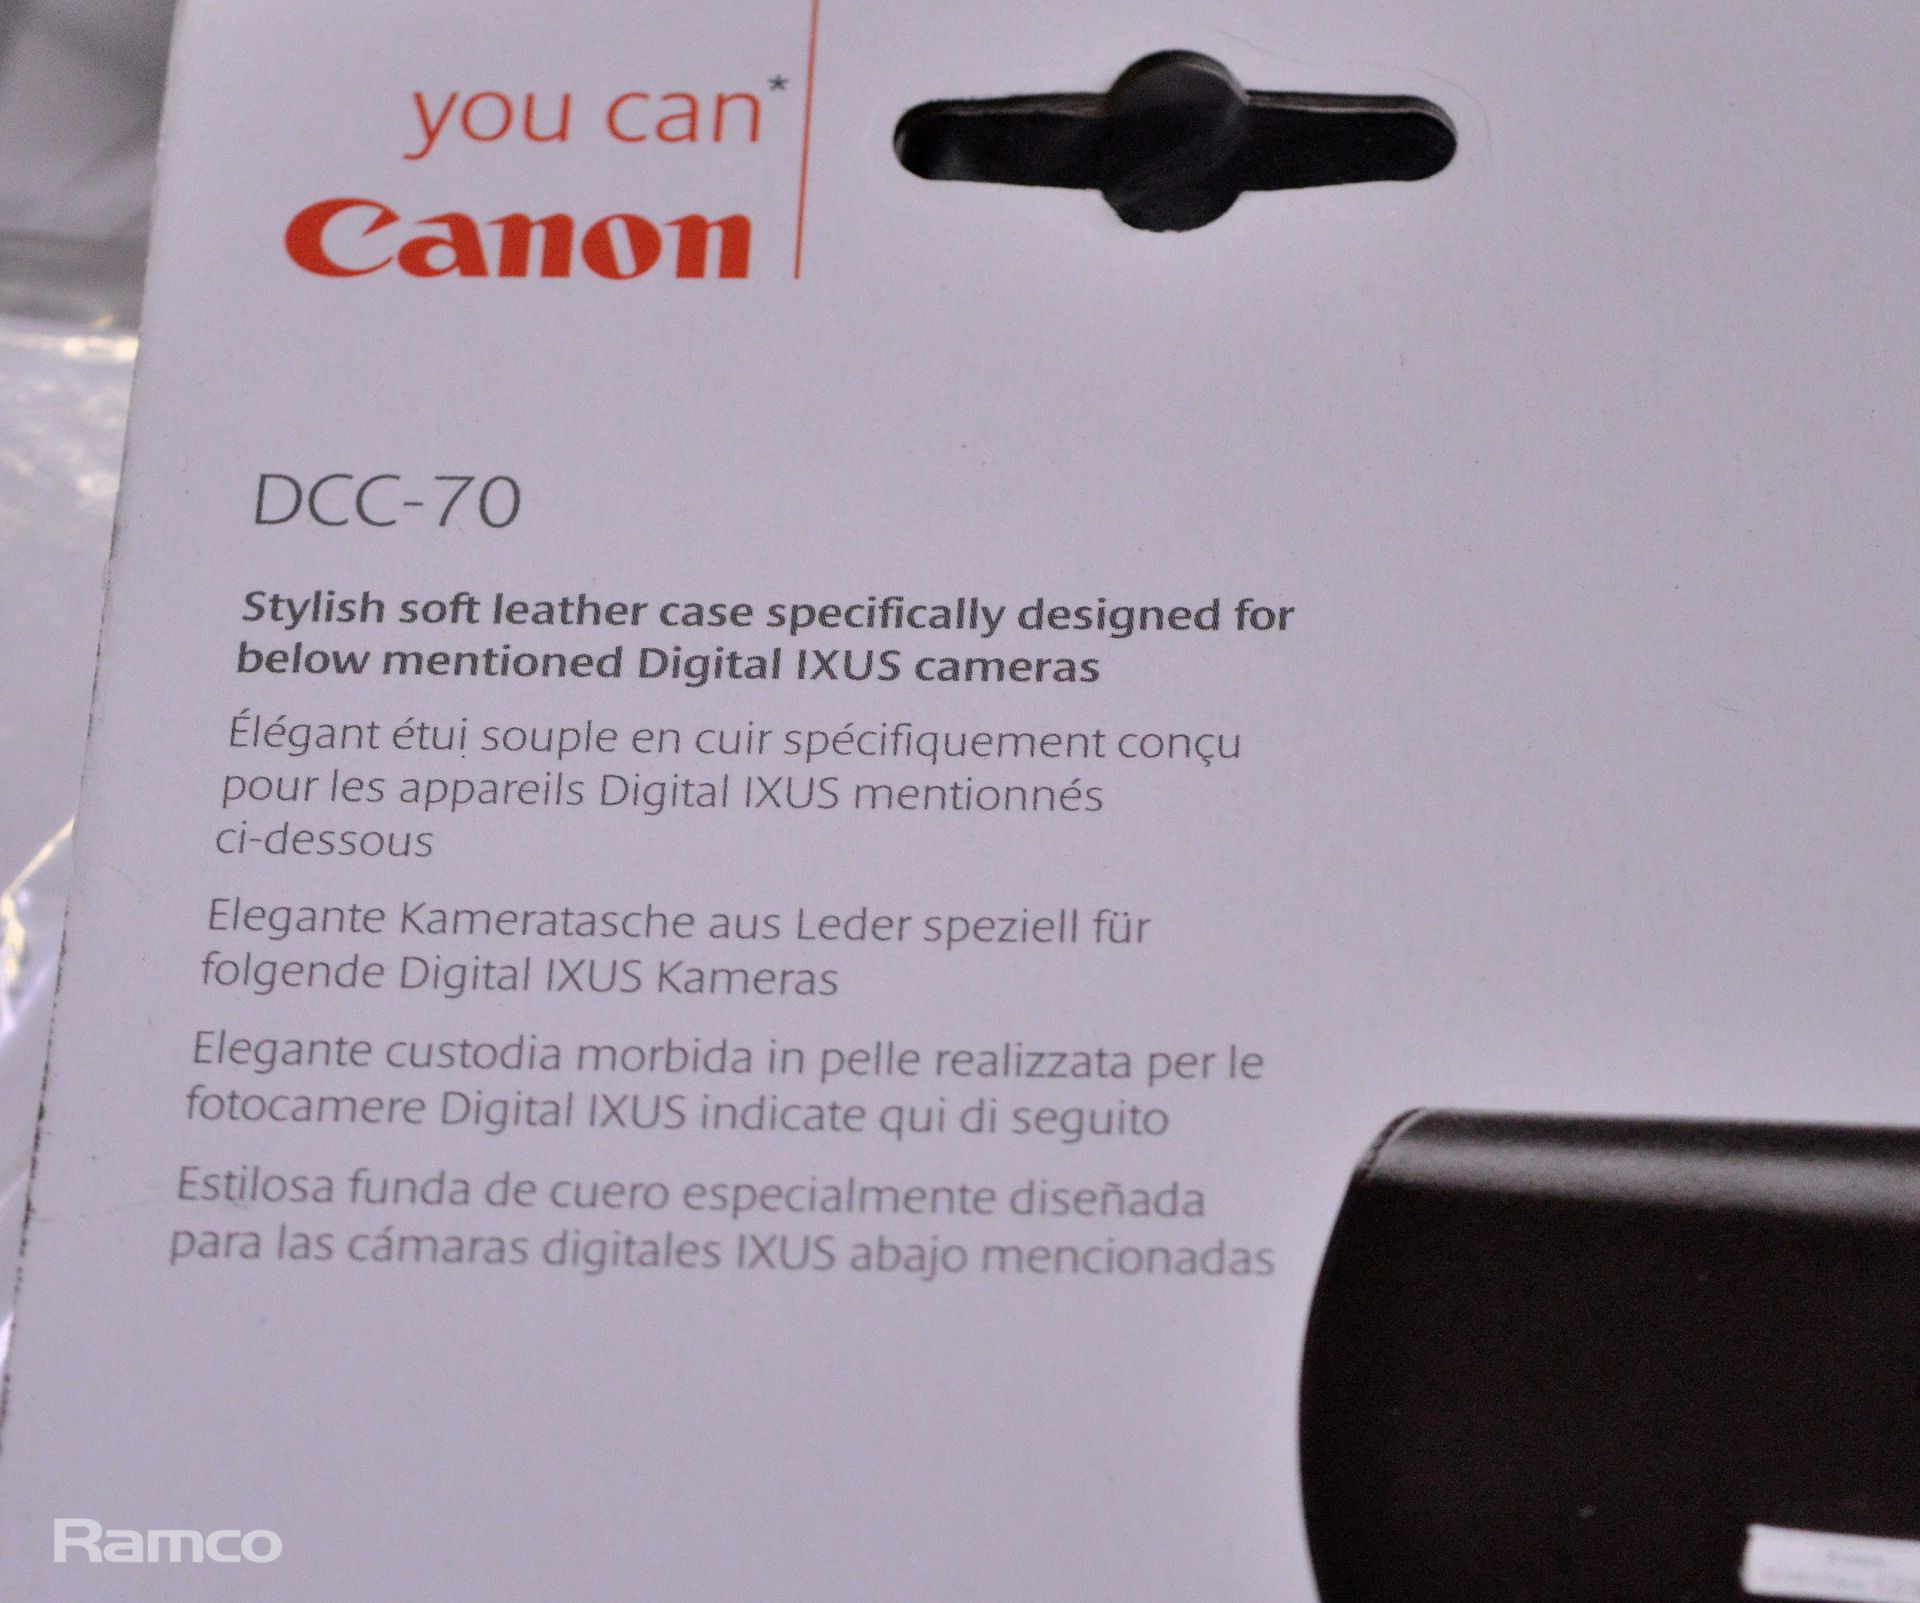 15x Canon DCC-70 Digital Ixus Soft Leather Cases - Image 3 of 3